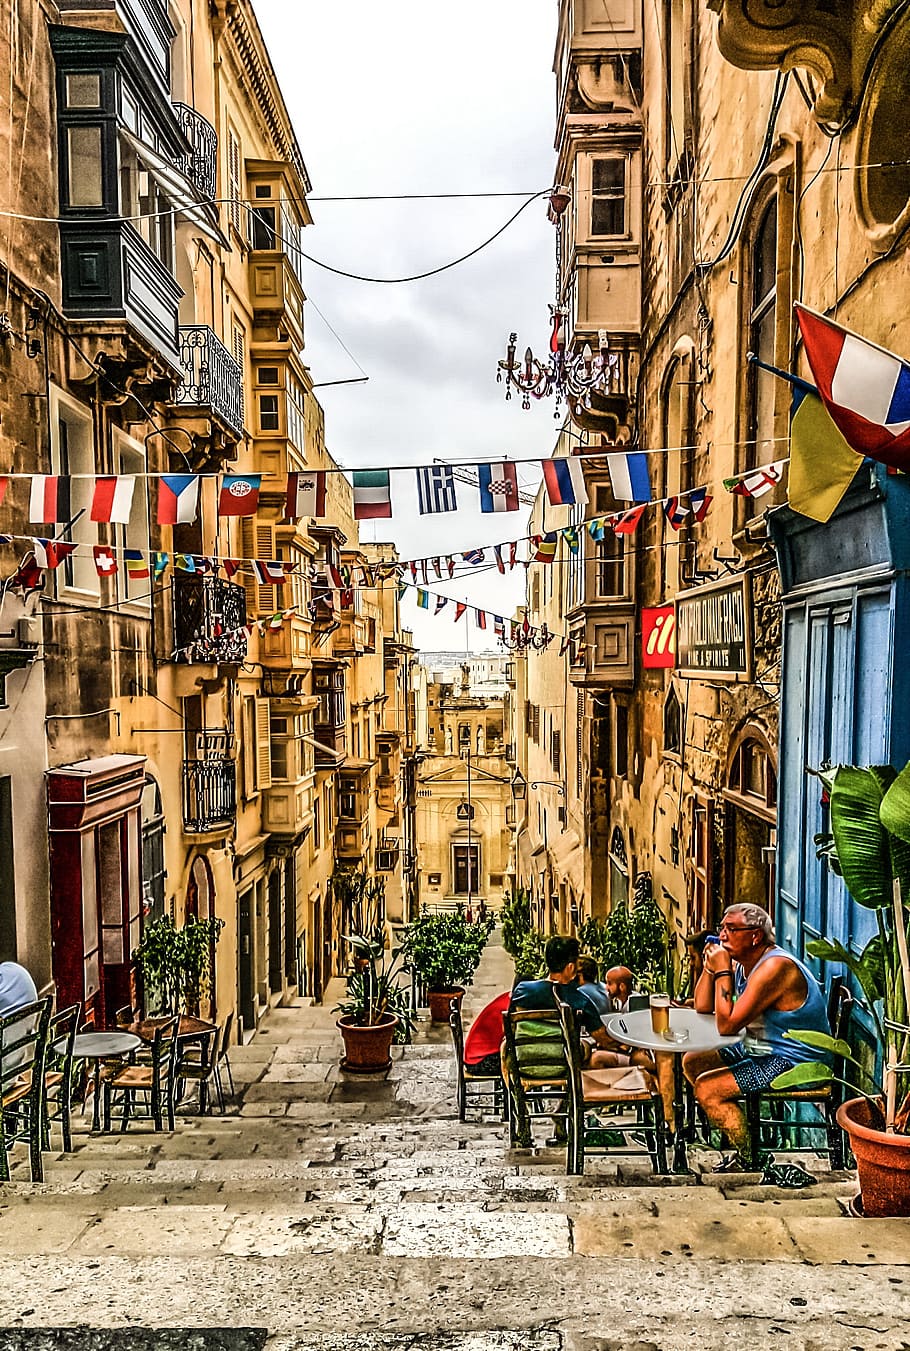 bunting, flags, hanging, buildings, Malta, Island, Mediterranean, Sidewalk, malta, island, alley